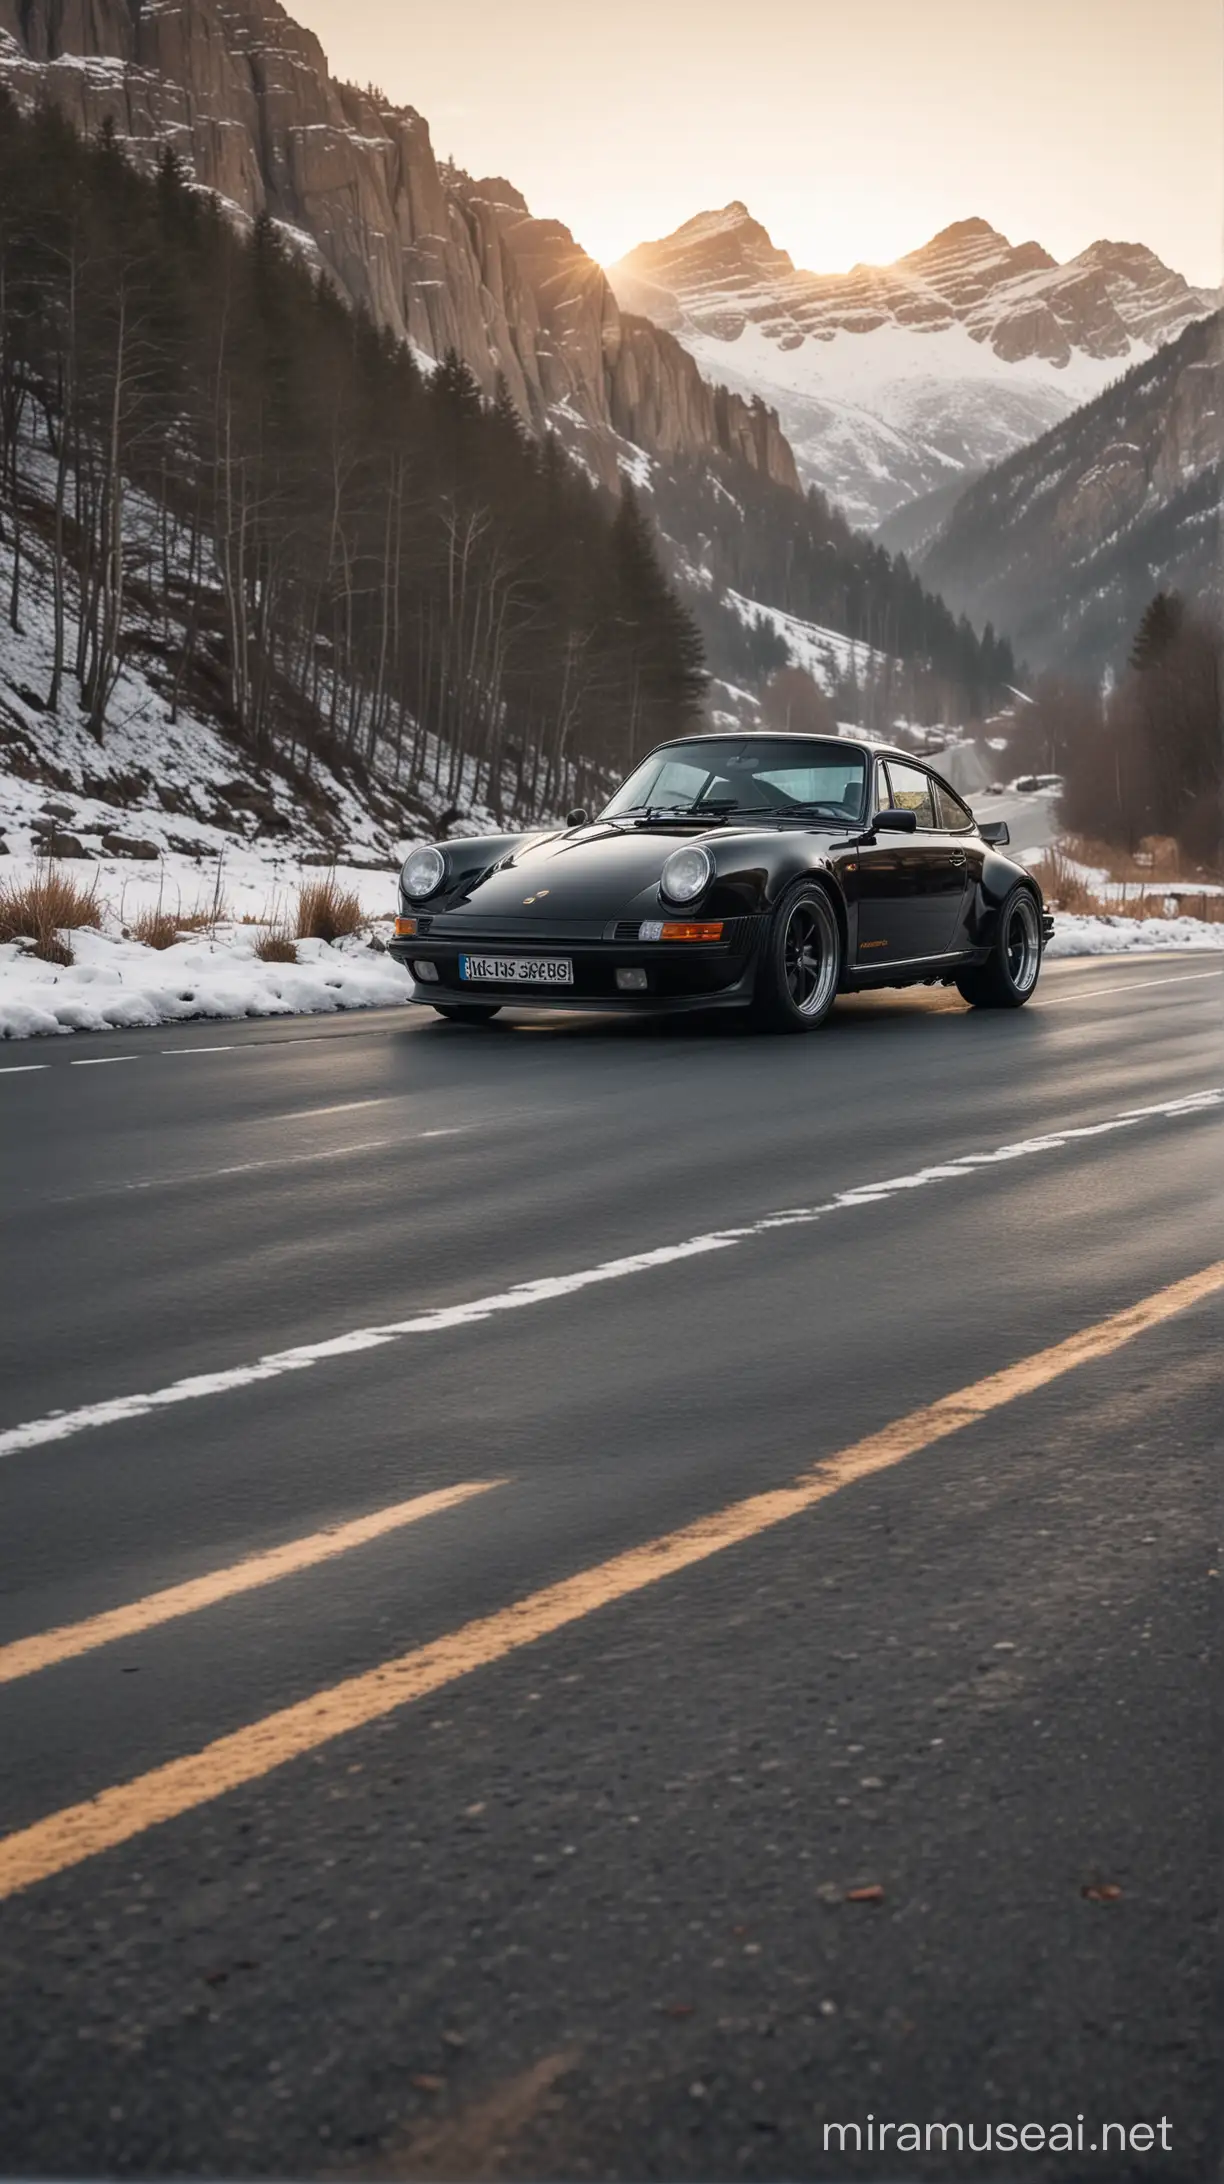 Sleek Black Porsche Singer on Snowy Mountain Road at Sunset